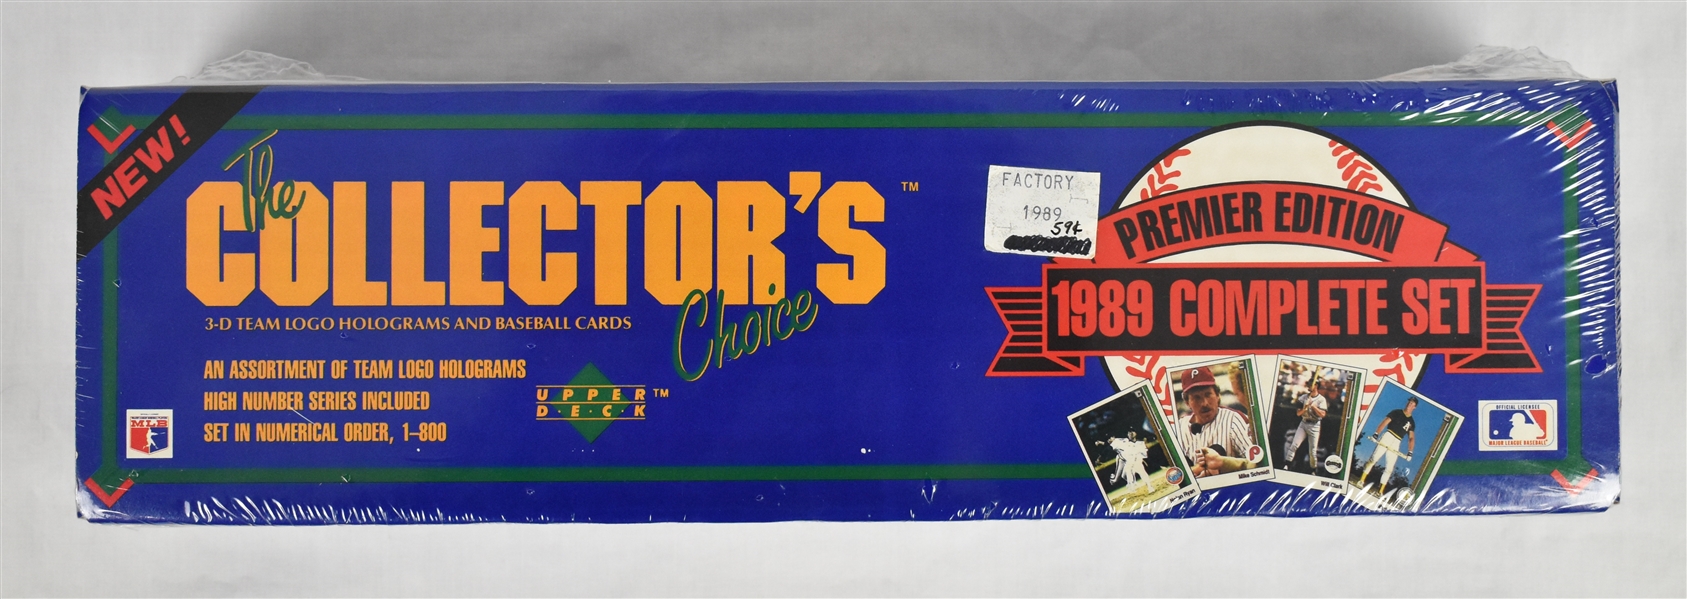 Upper Deck 1989 Sealed Baseball Card Set w/Ken Griffey Jr. Rookie Card